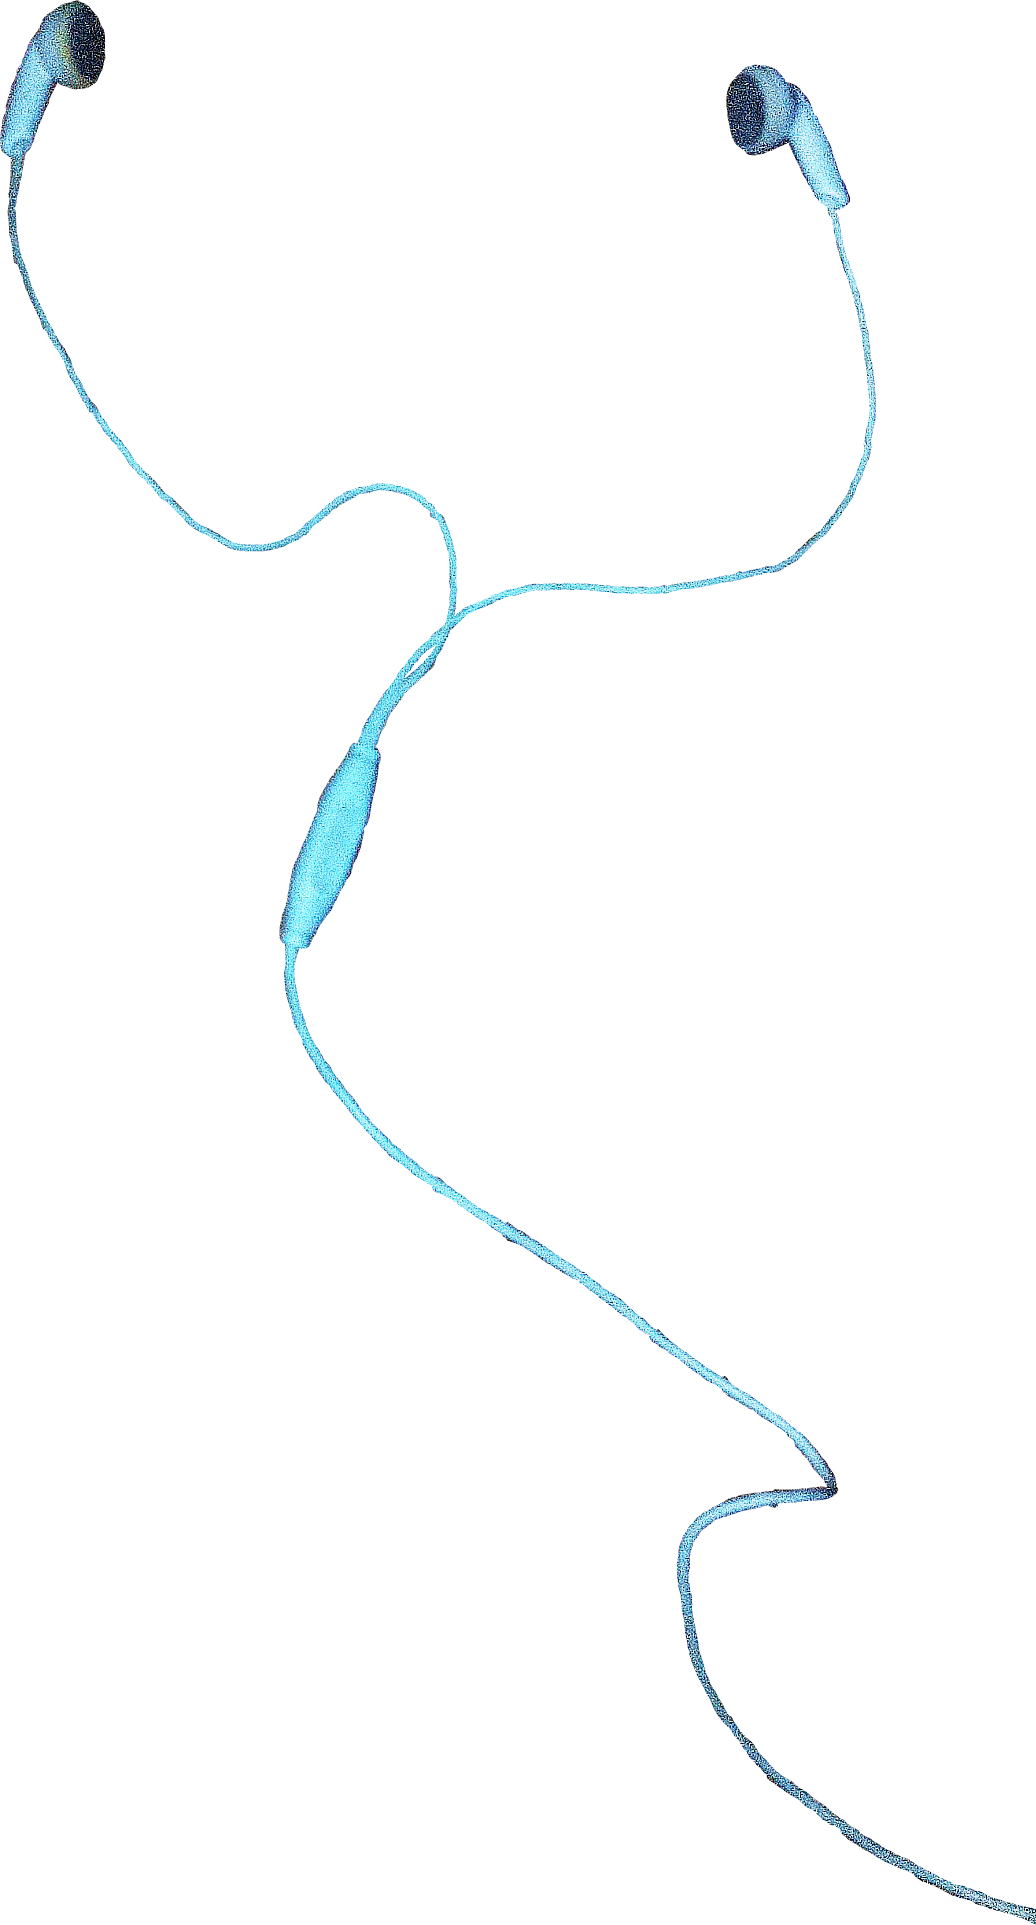 A Blue String On A Black Background